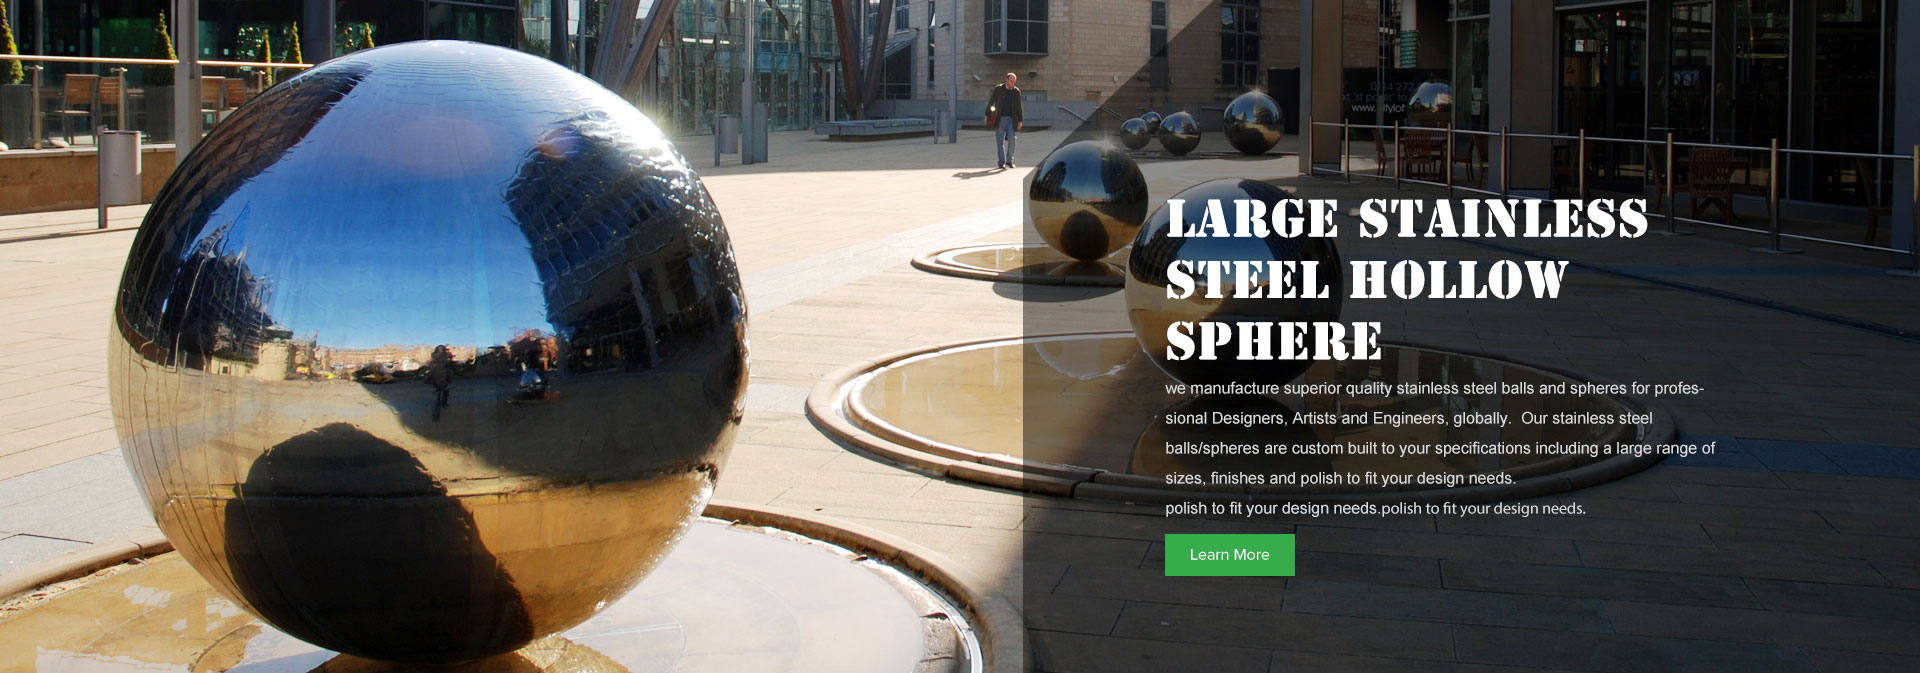 City Public Art Fountain Sphere